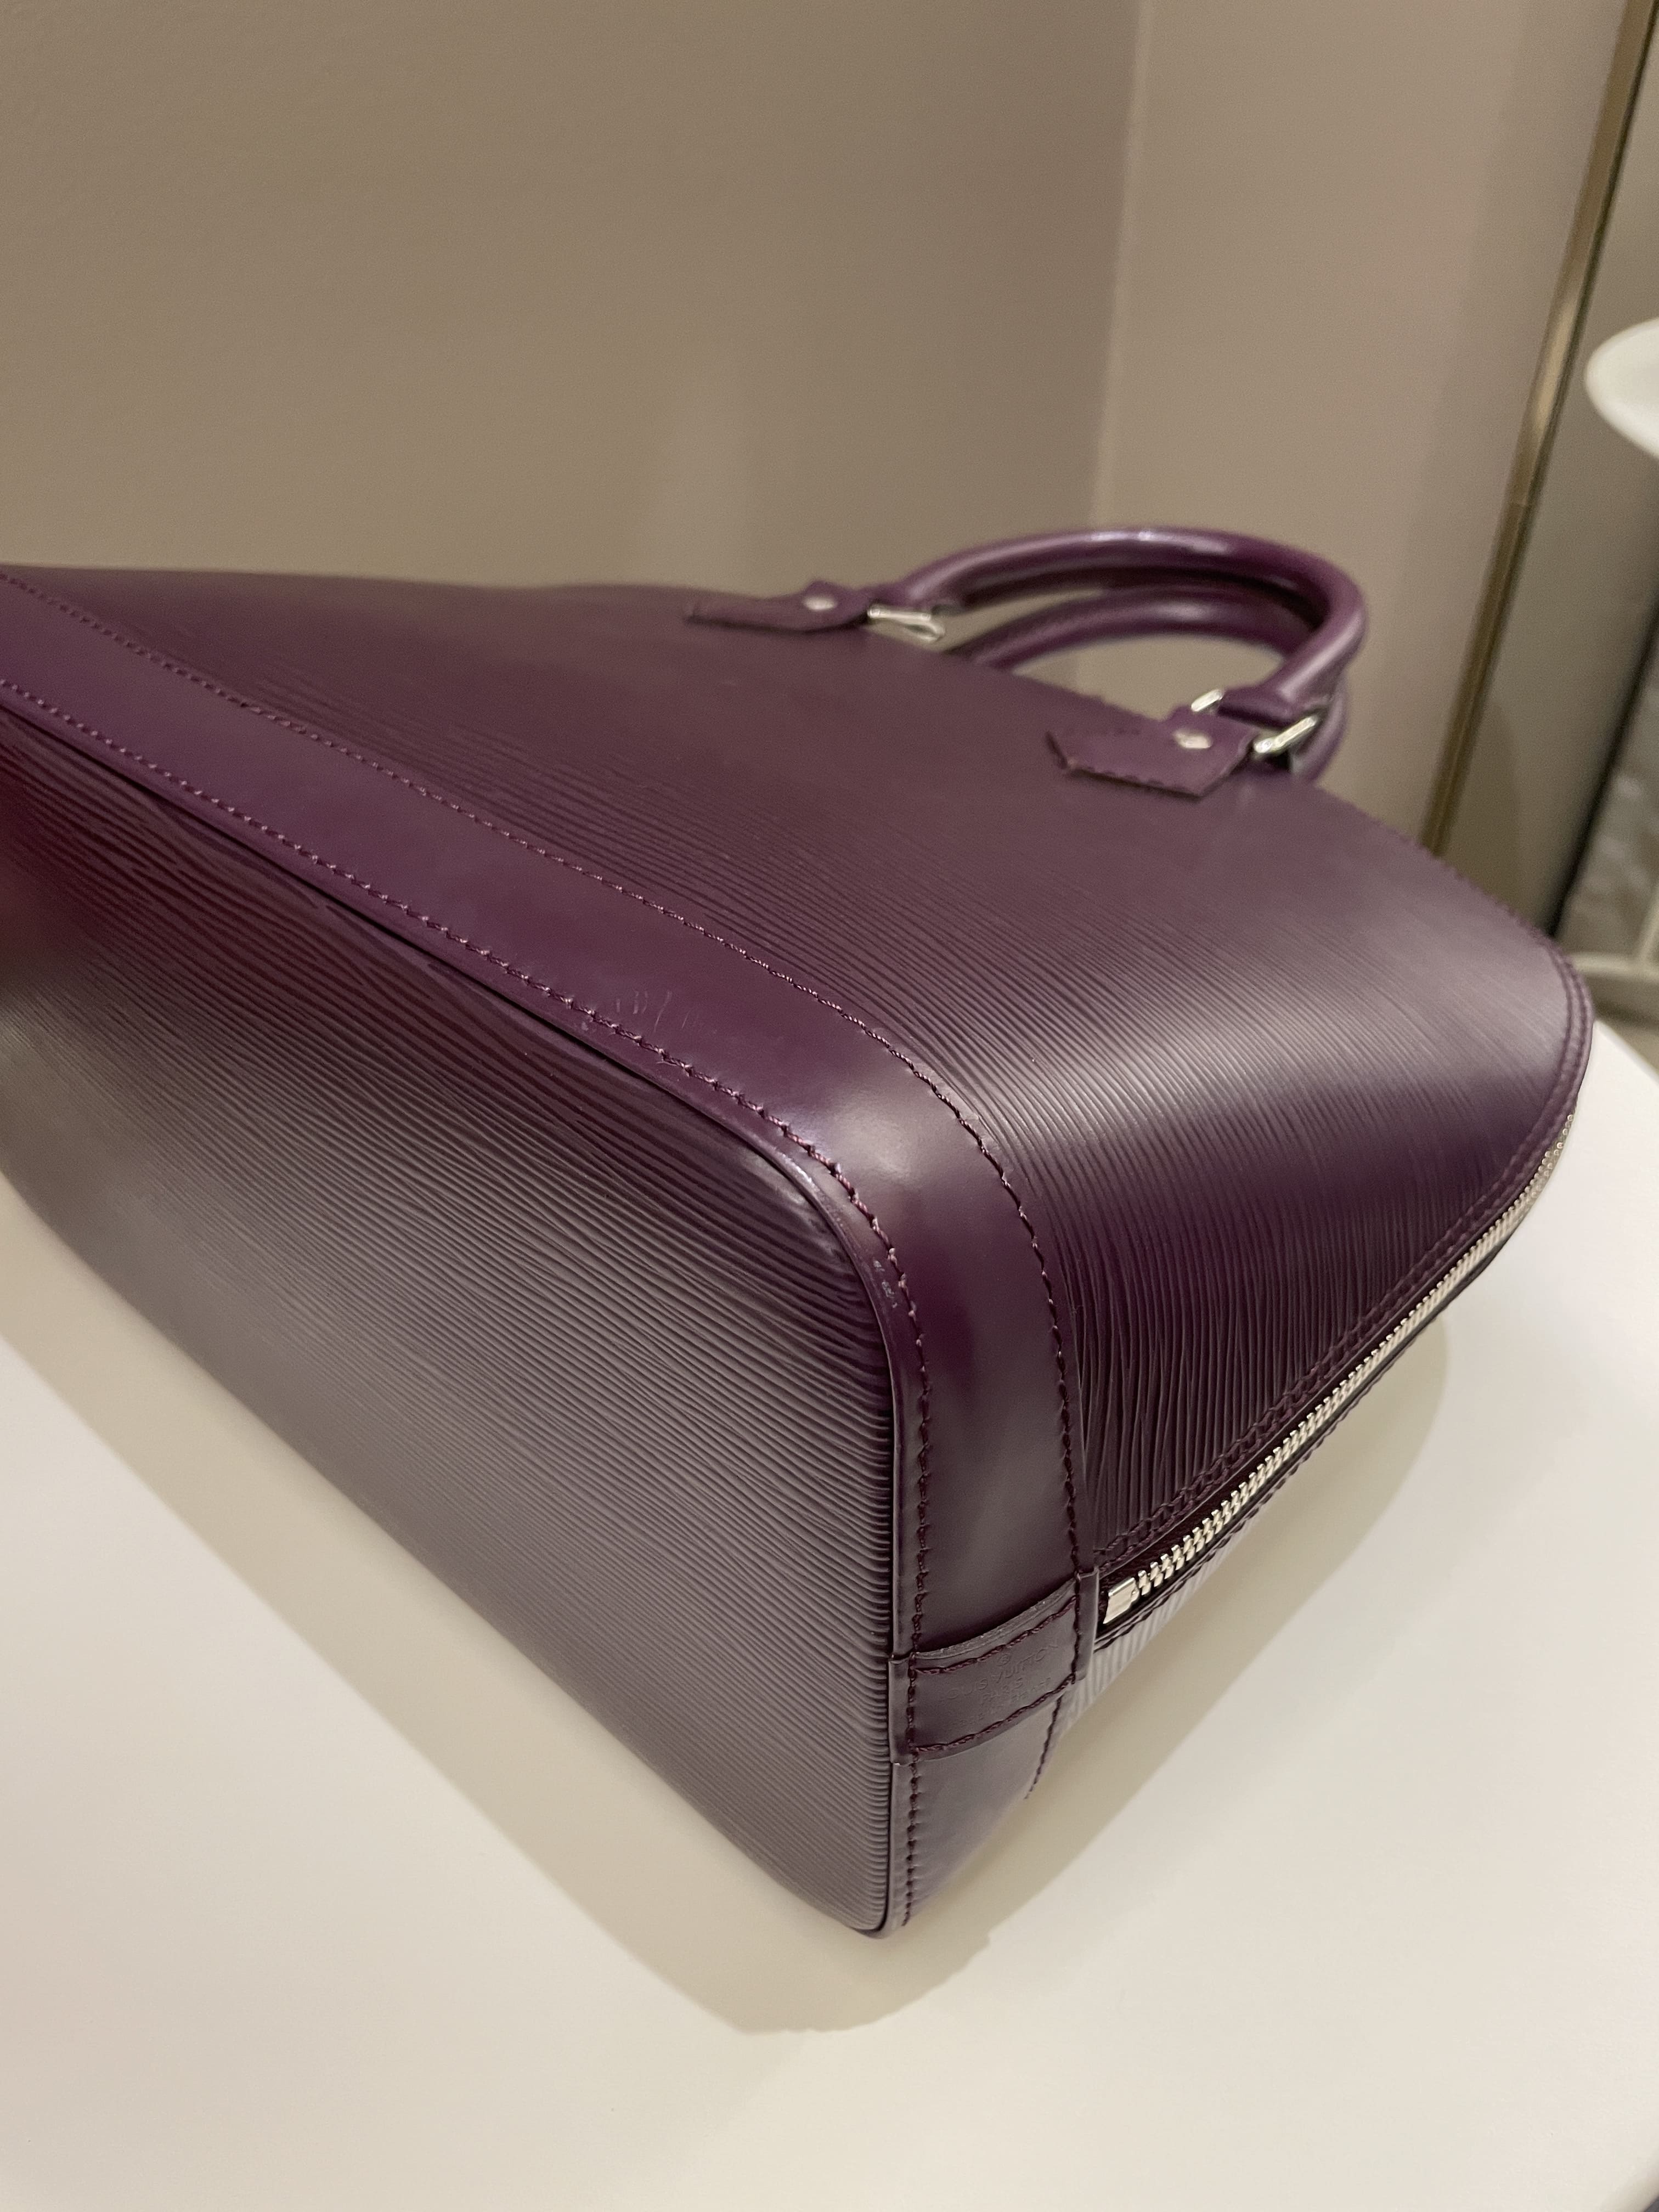 Louis Vuitton Cassis Alma PM Handbag